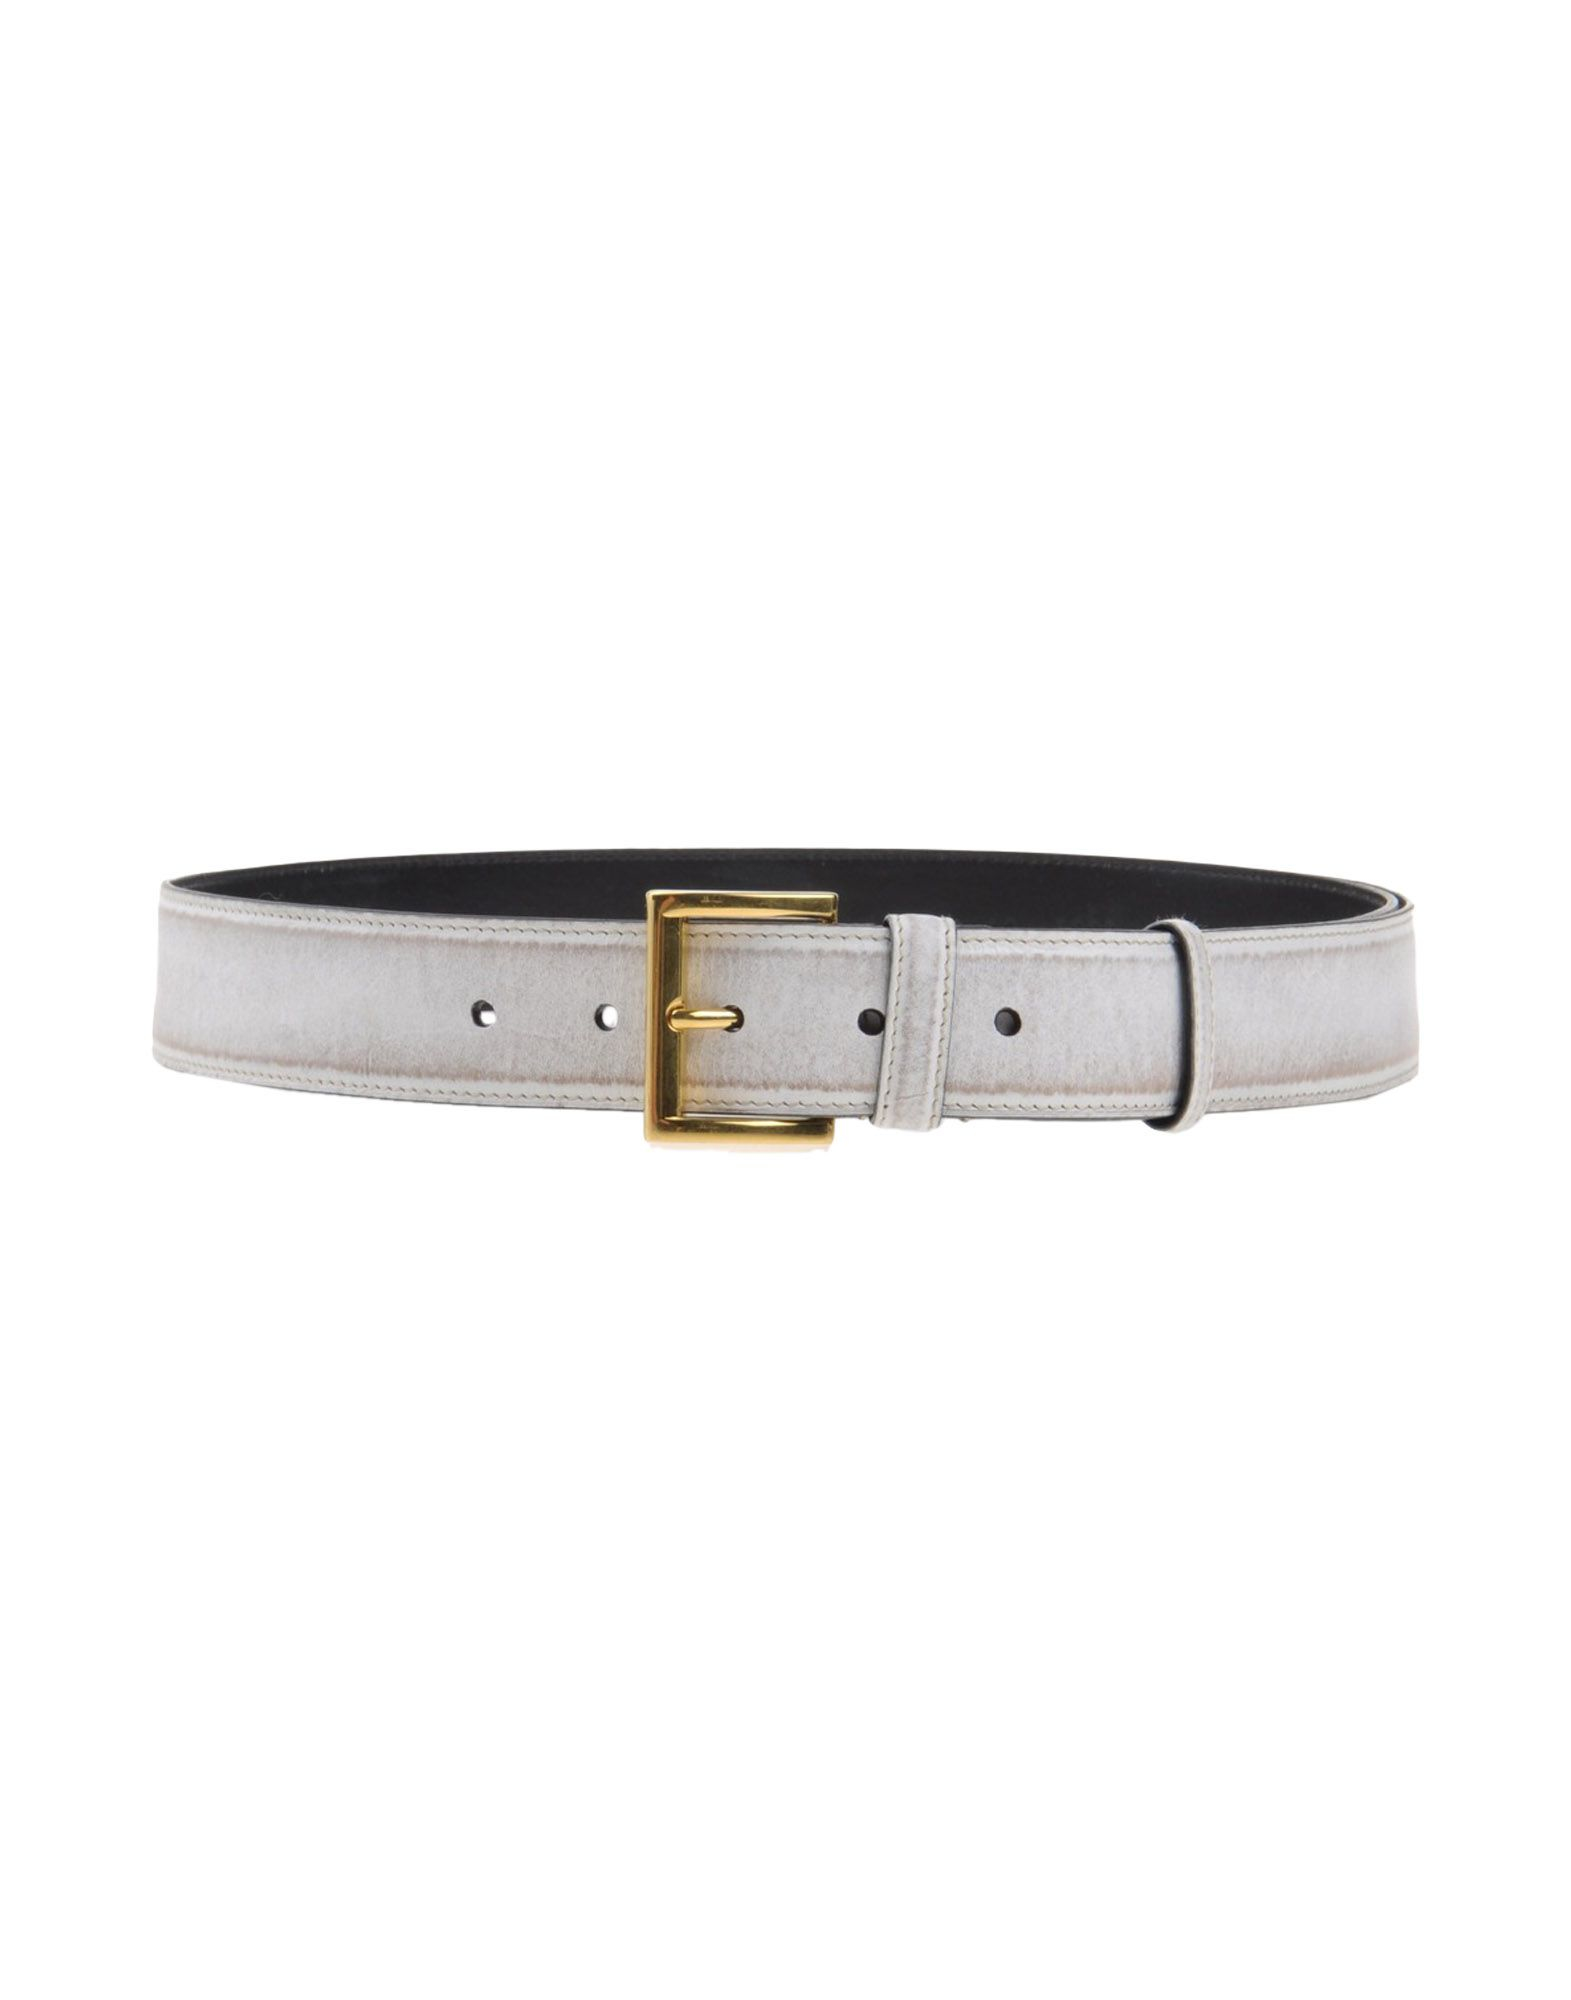 Prada Belt in White | Lyst  